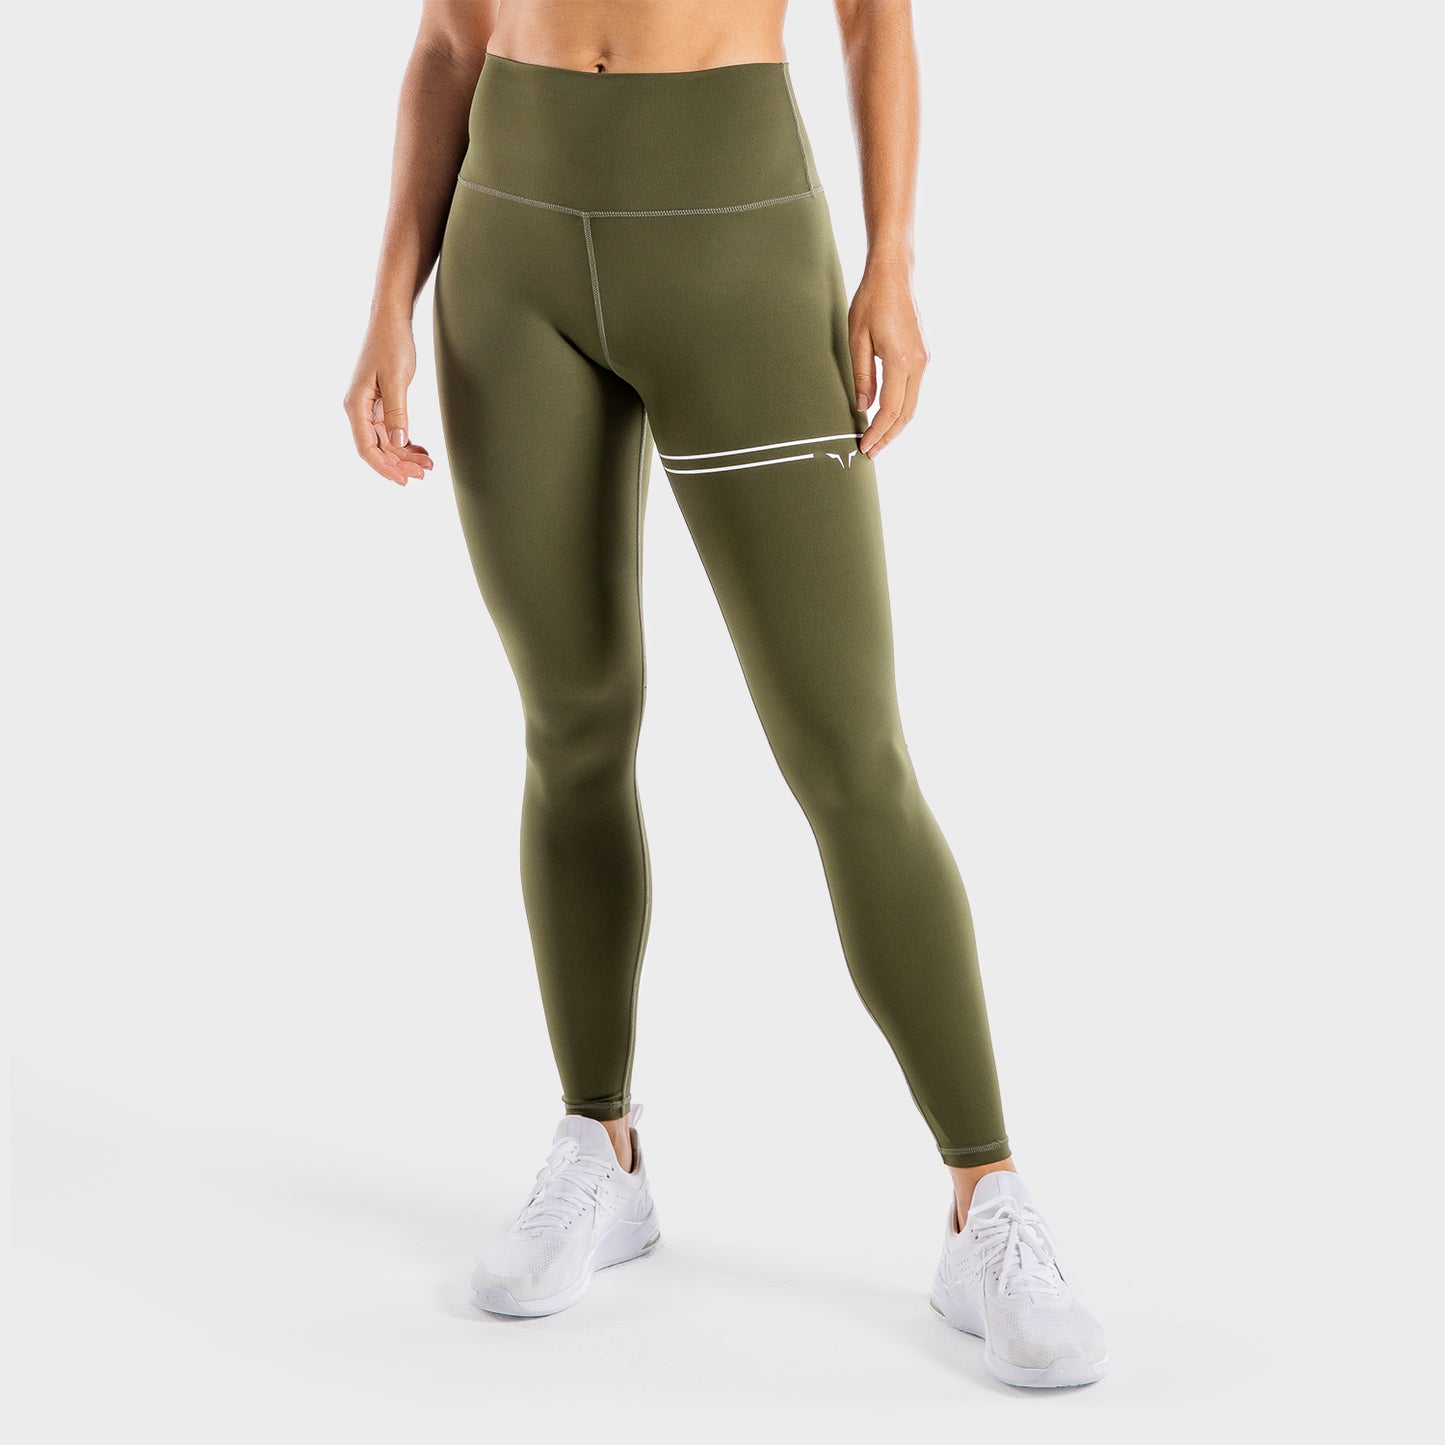 squatwolf-workout-clothes-flux-leggings-khaki-gym-leggings-for-women